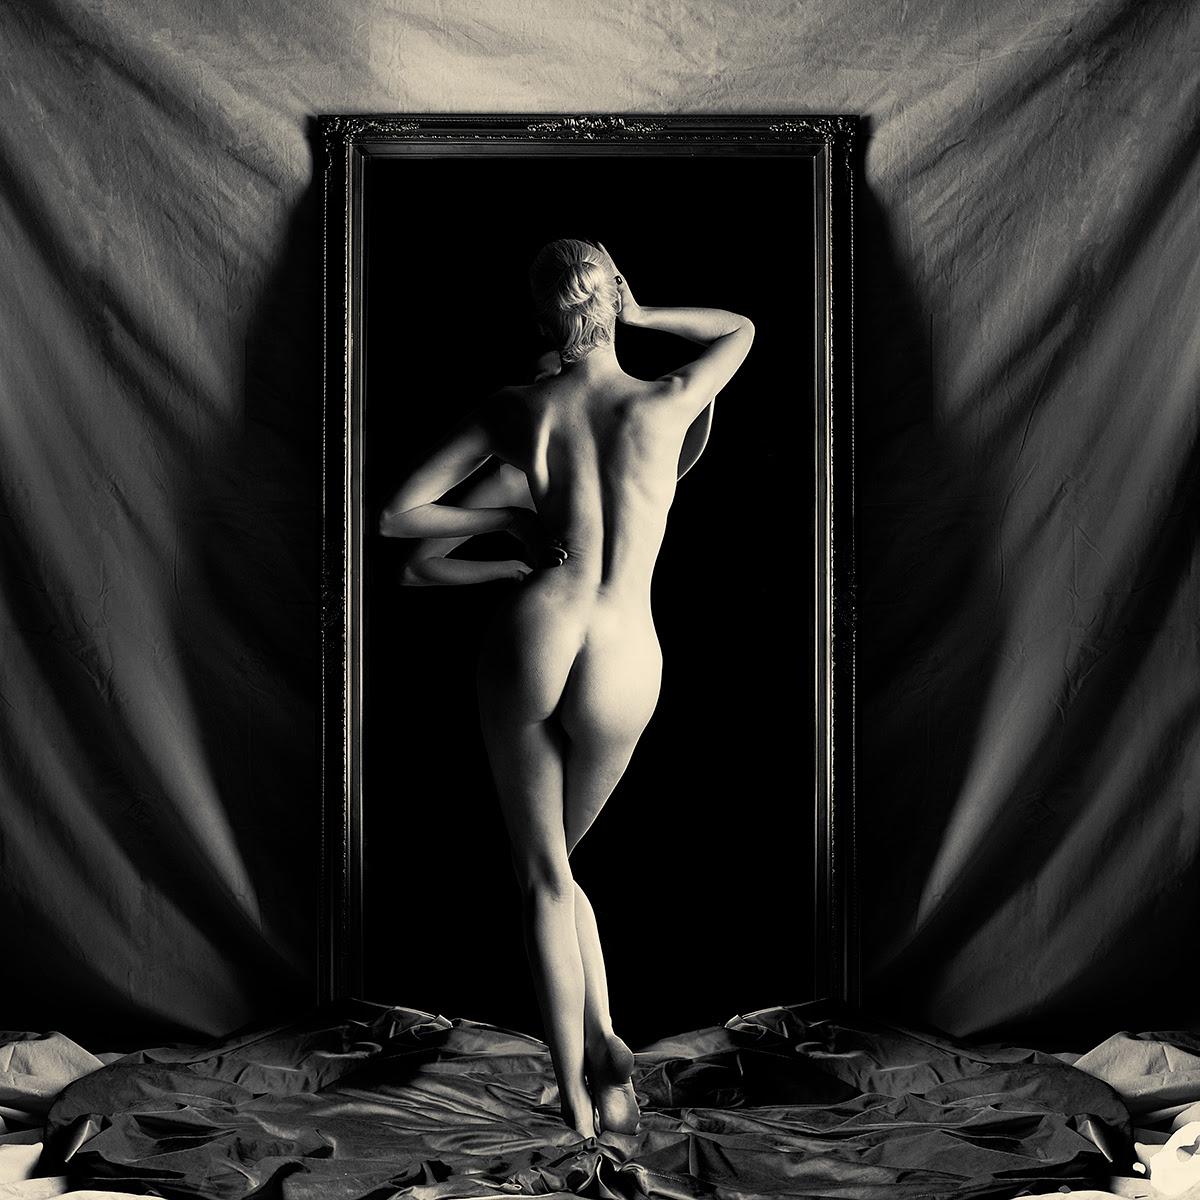 Tyler Shields Portrait Photograph - Into the Mirror (18" x 18")